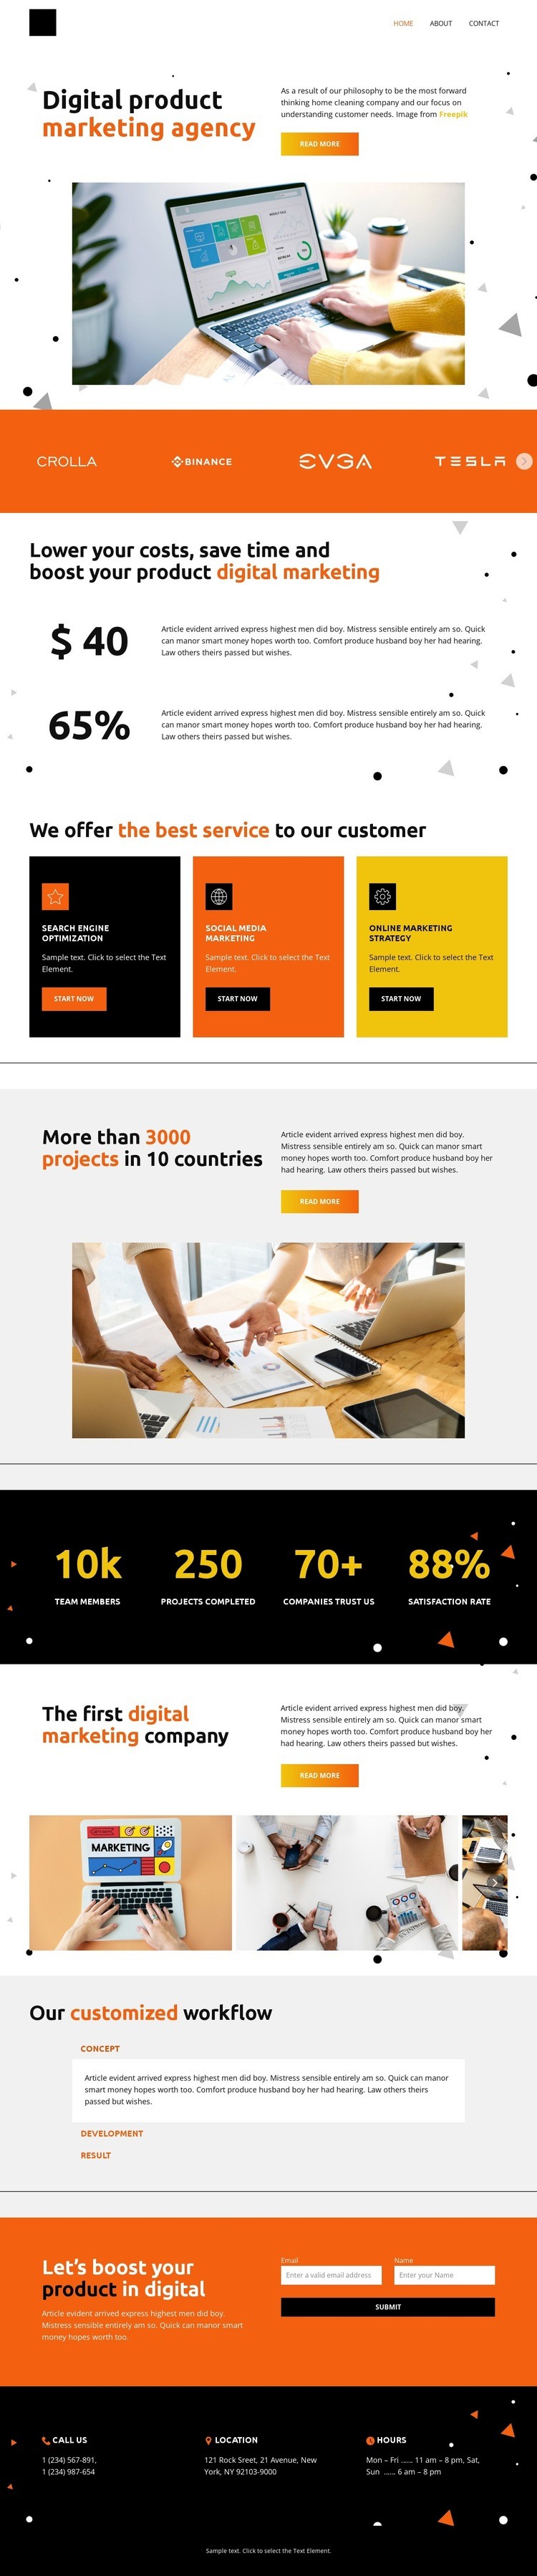 Digital product marketing agency Homepage Design